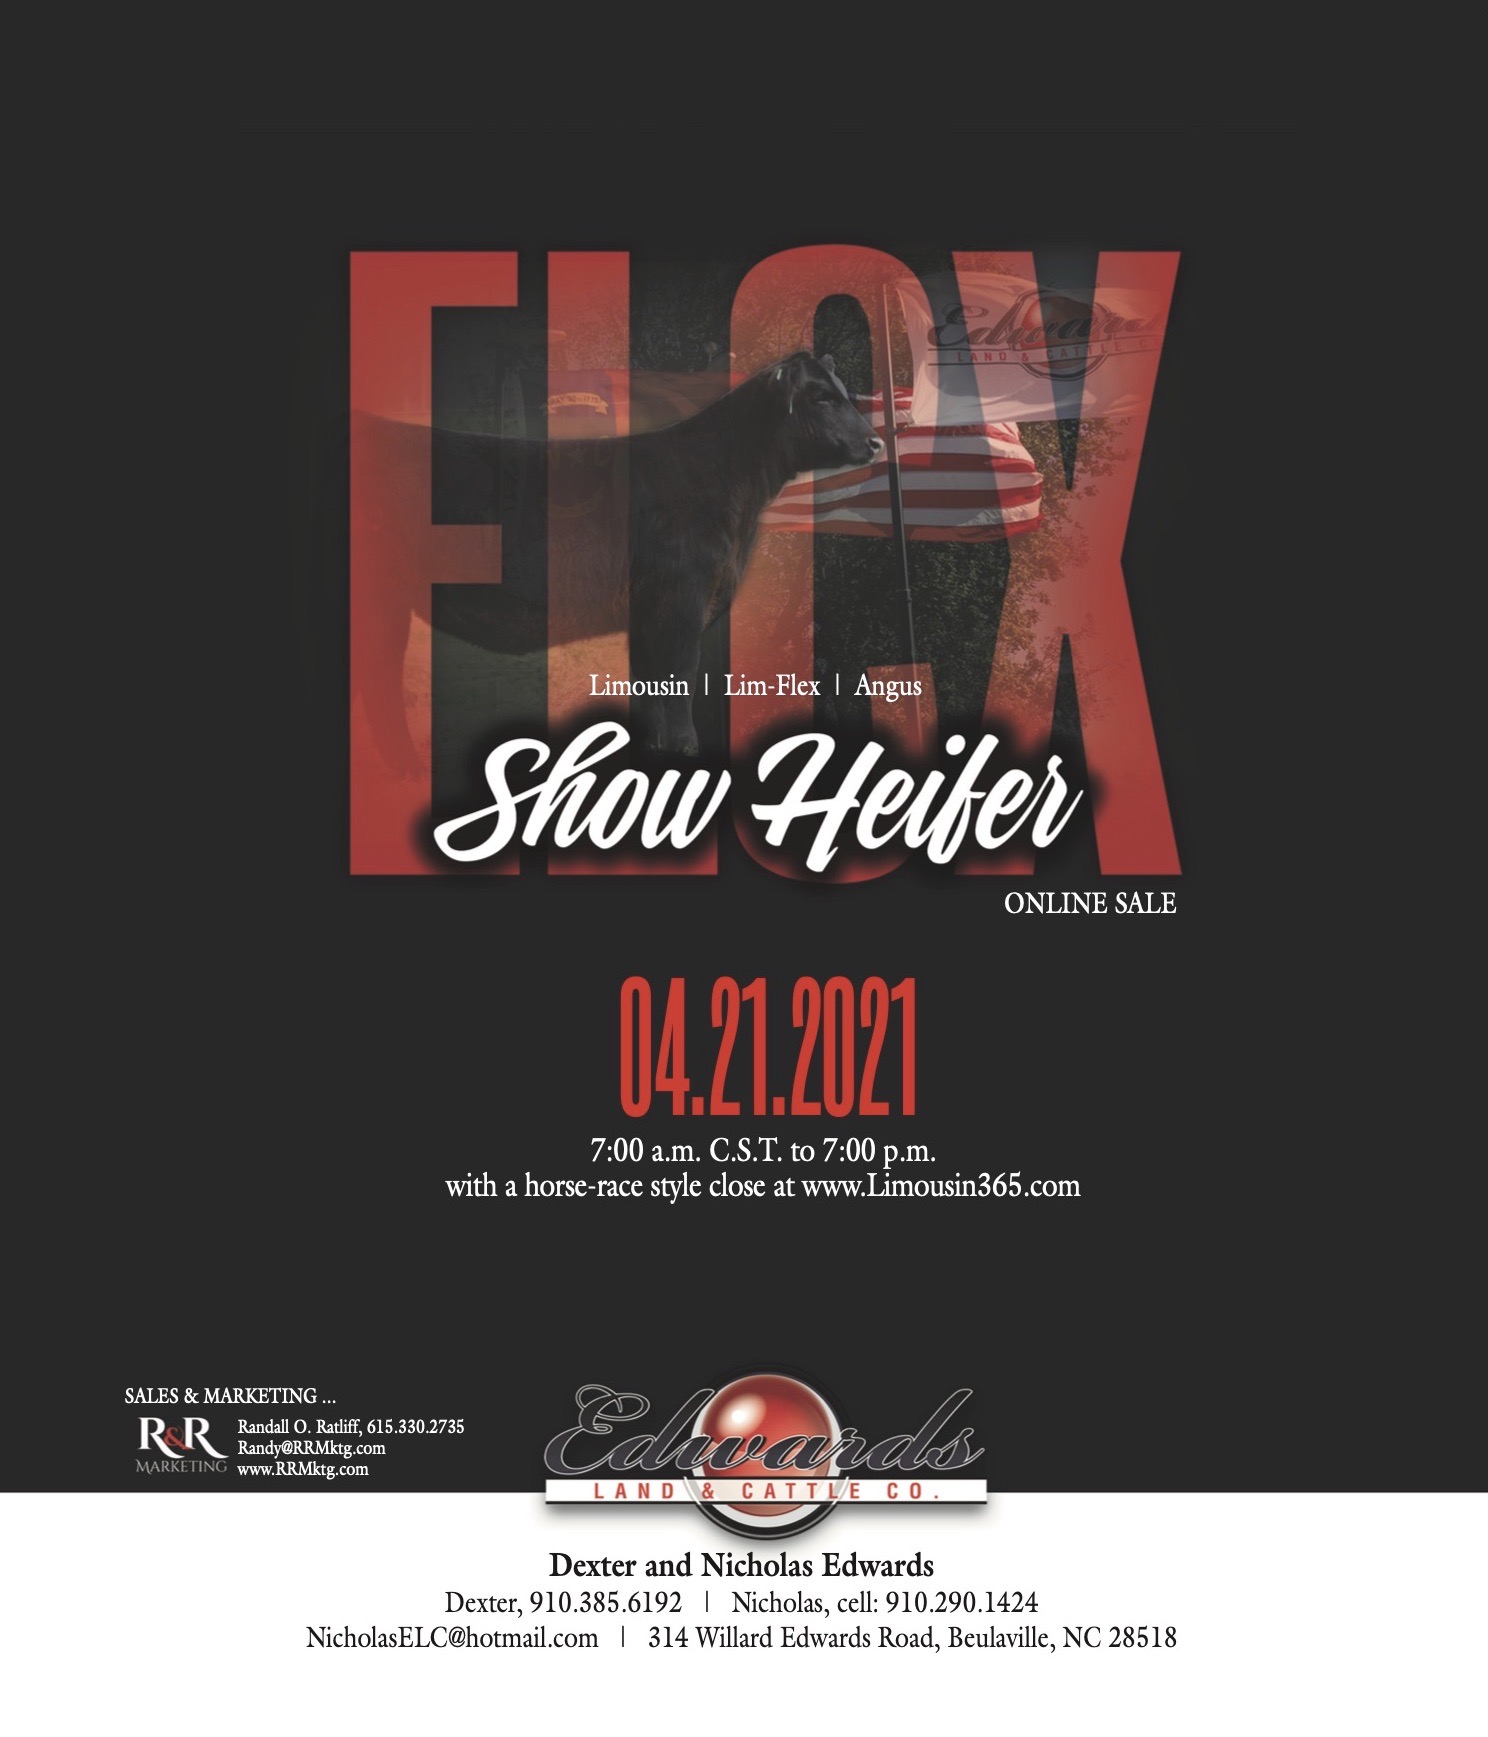 ELCX Show Heifer & Bull Online Sale 4.21.2021